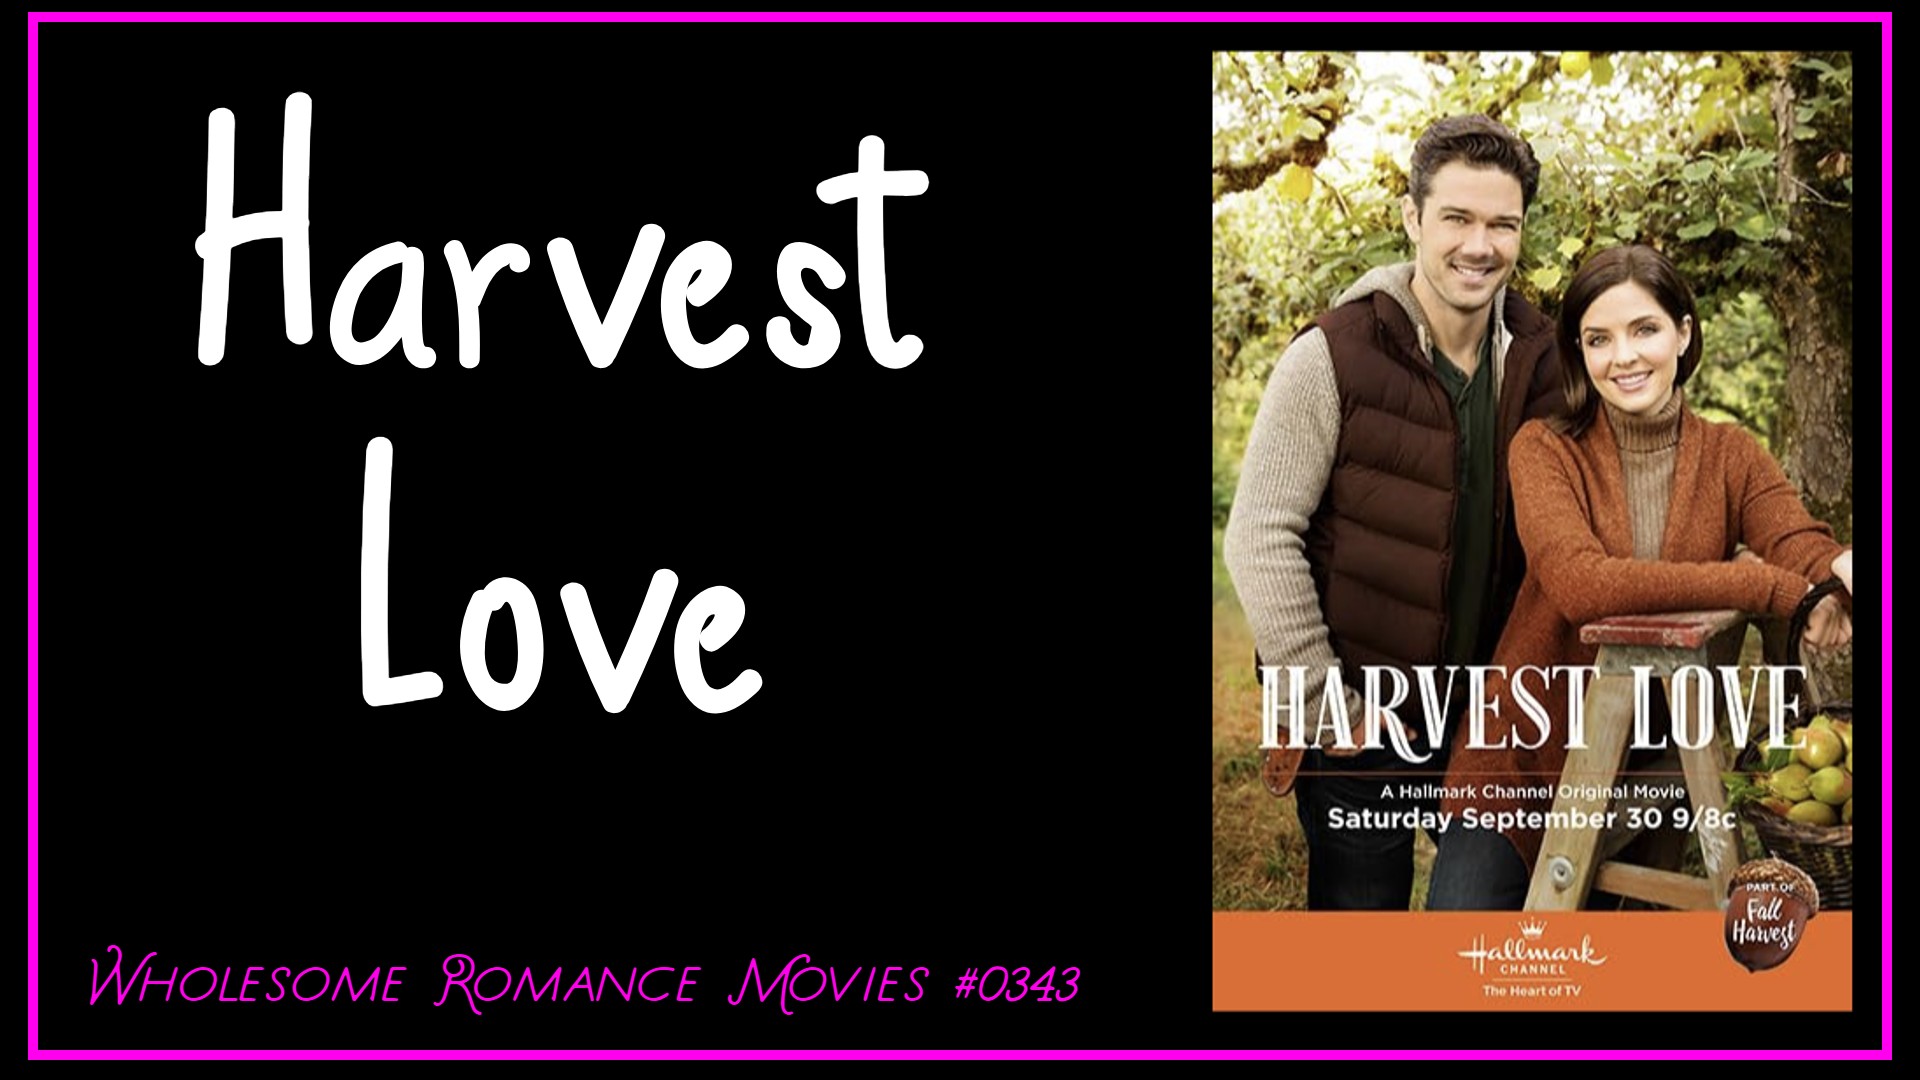 Harvest Love (2017)